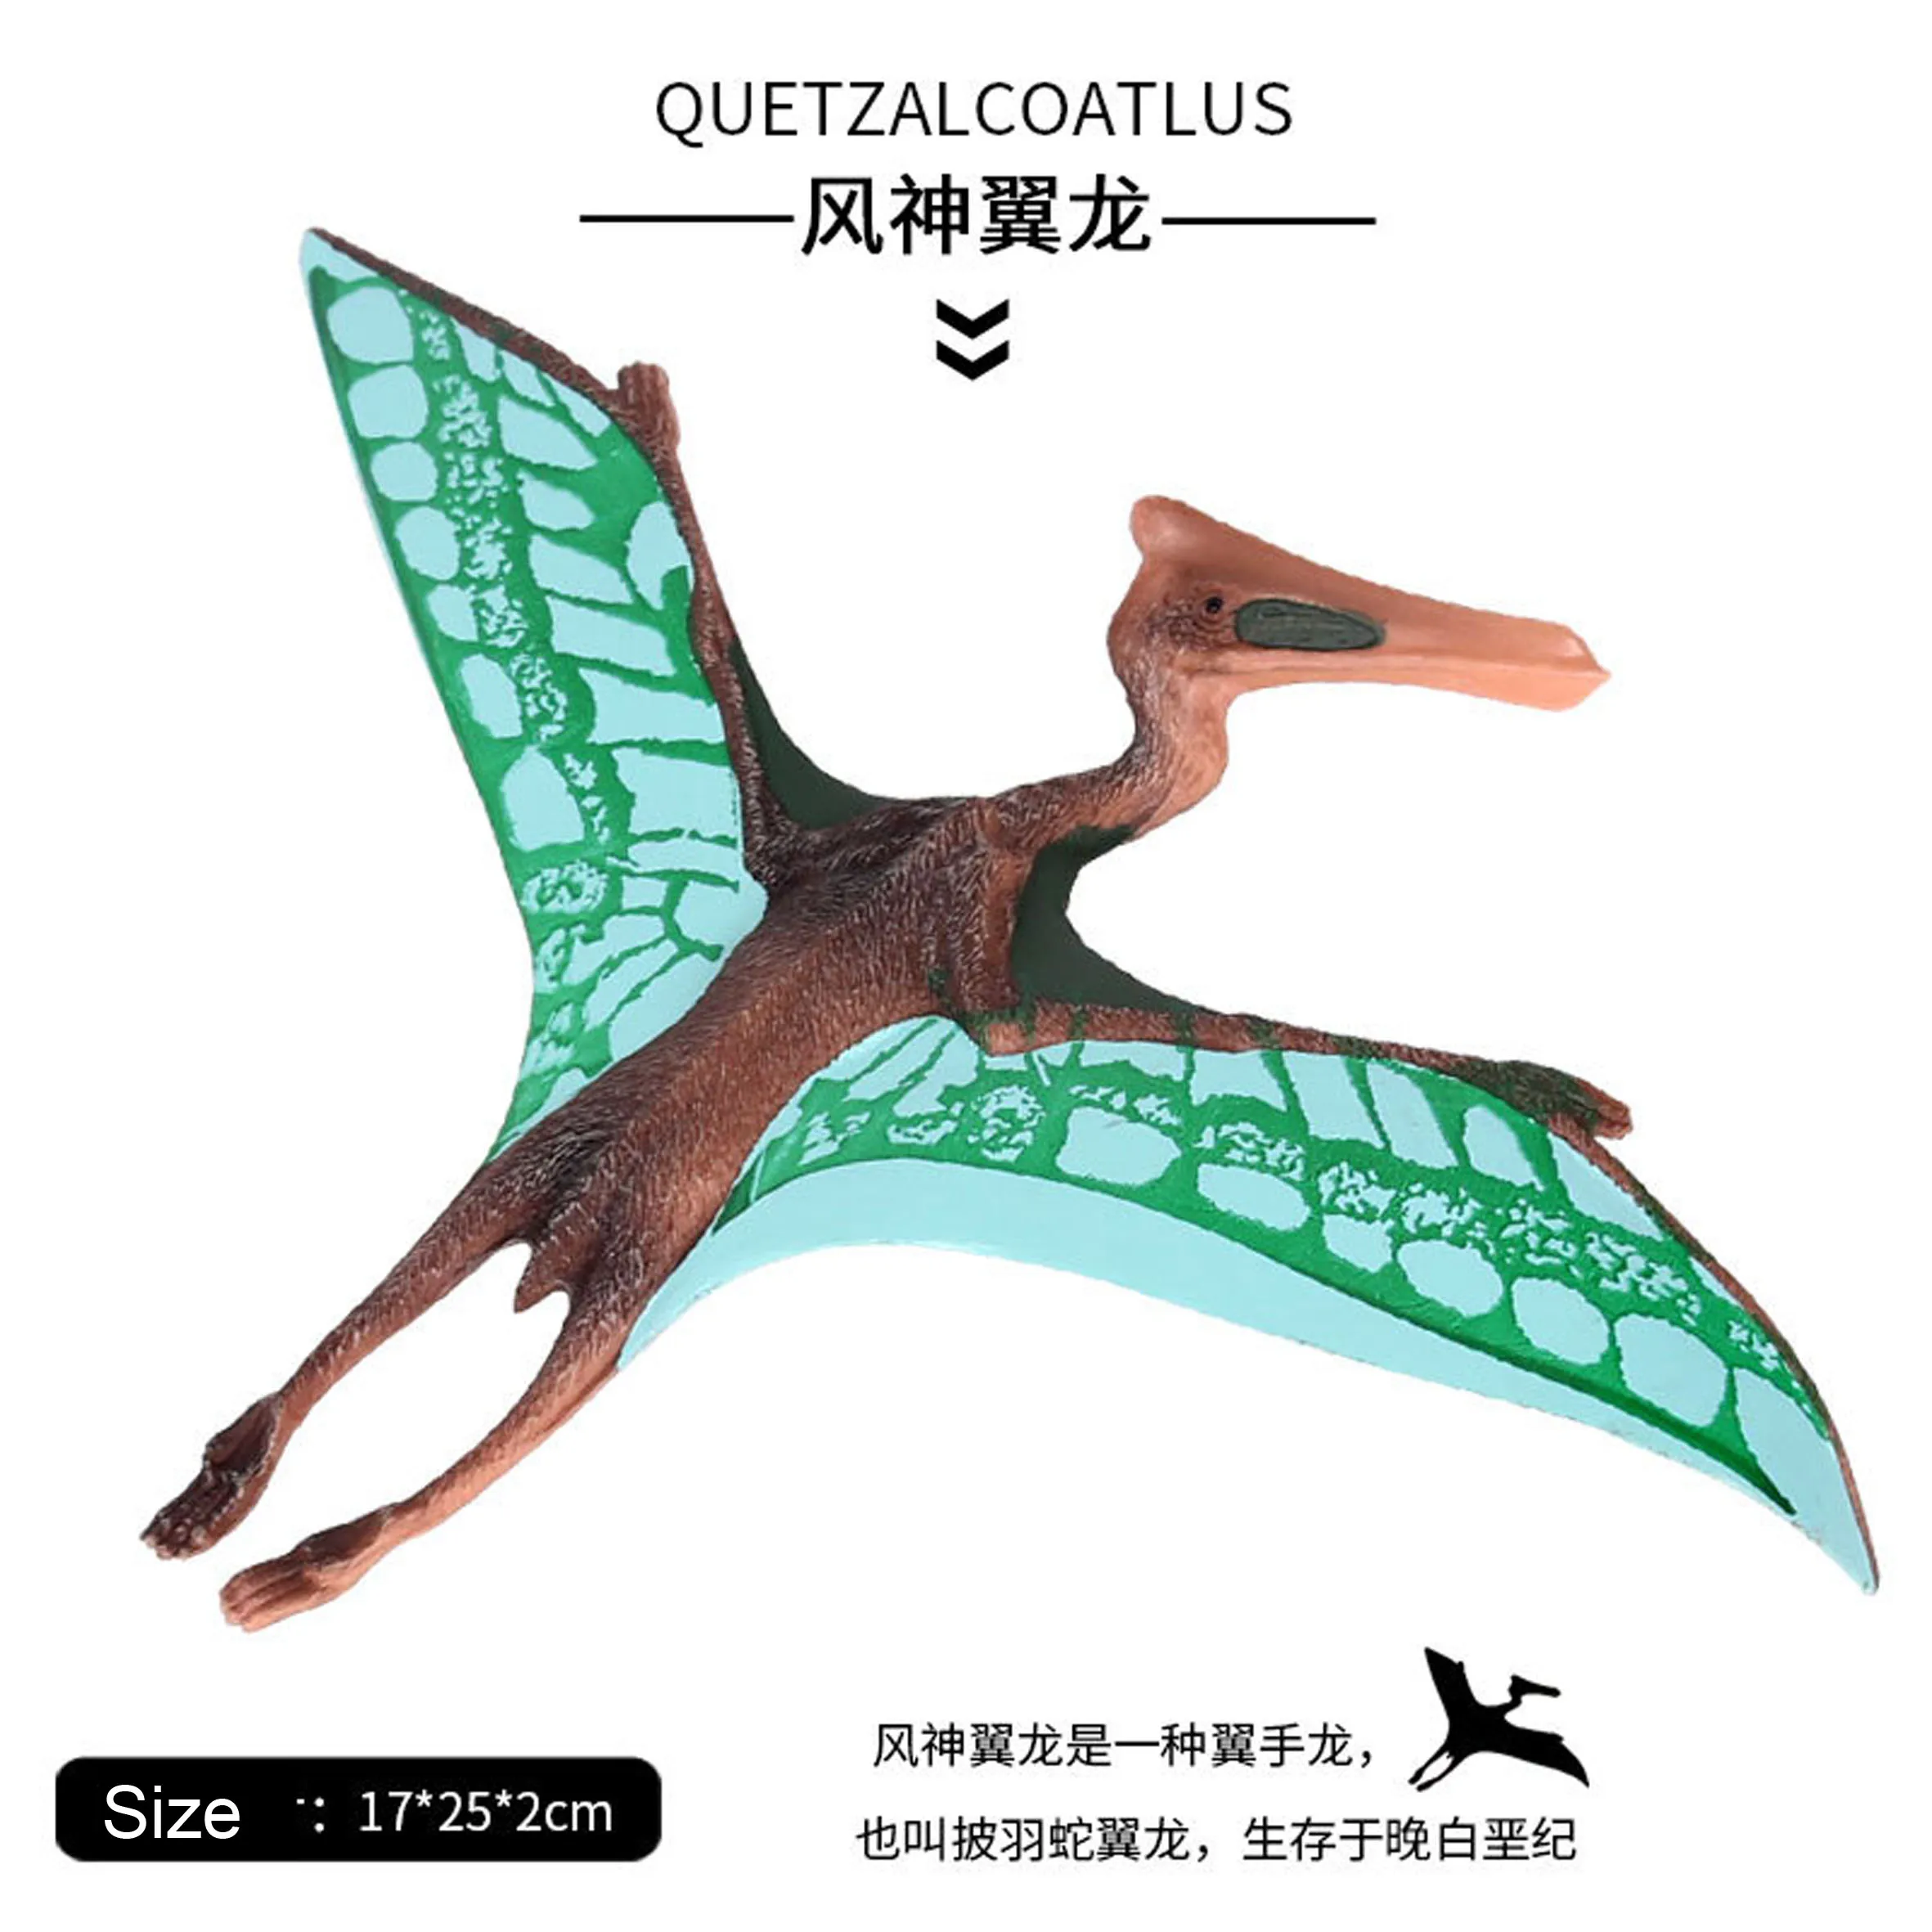 1pc Green Quetzalcoatlus Bird-liking Model Dinosaur Theme Party Toys Xmas holiday Kids gift fancy desktop decor